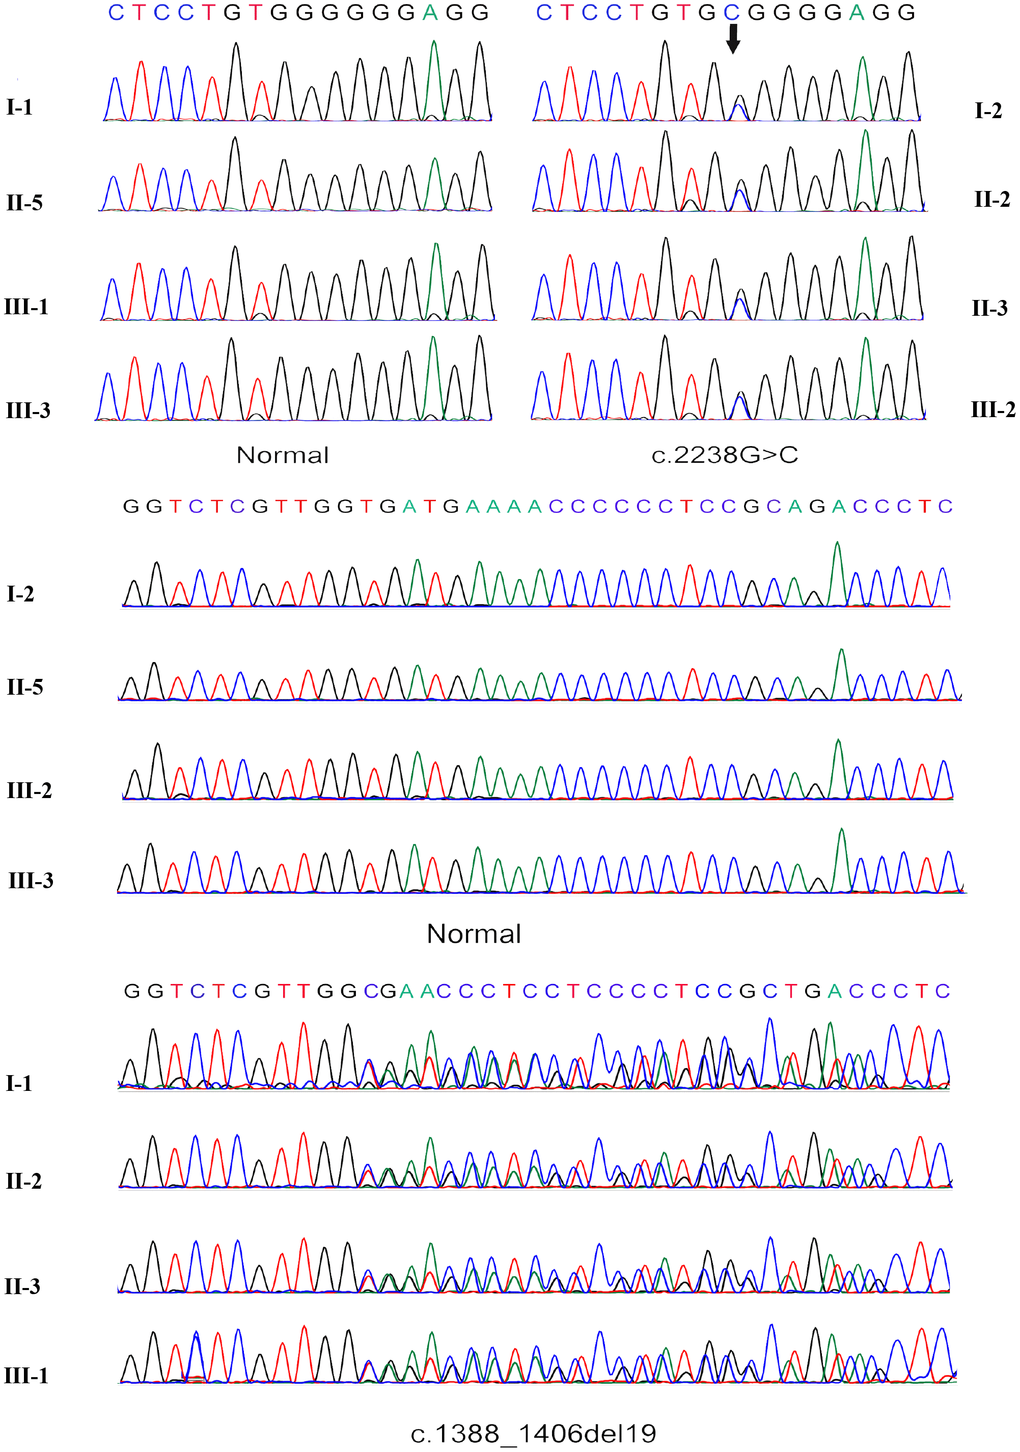 Sanger sequencing verification of the c.2238G>C mutation and frameshift mutation c.1388